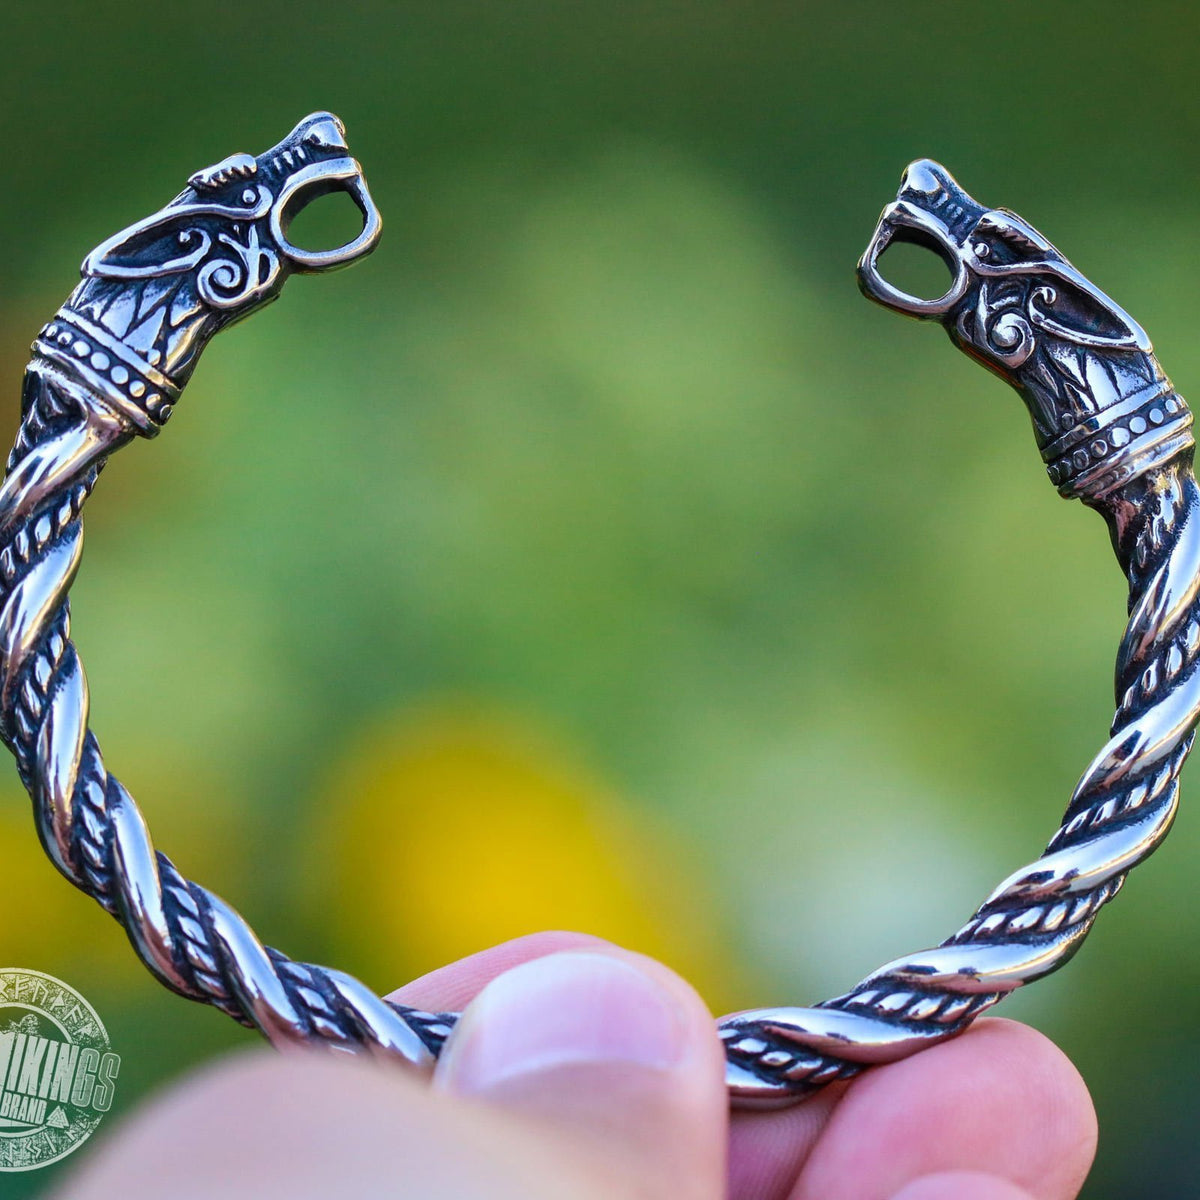 authentic viking bracelets 355028 1200x1200 - 10 Methods Of Viking Bracelets For Sale That can Drive You Bankrupt - Fast!